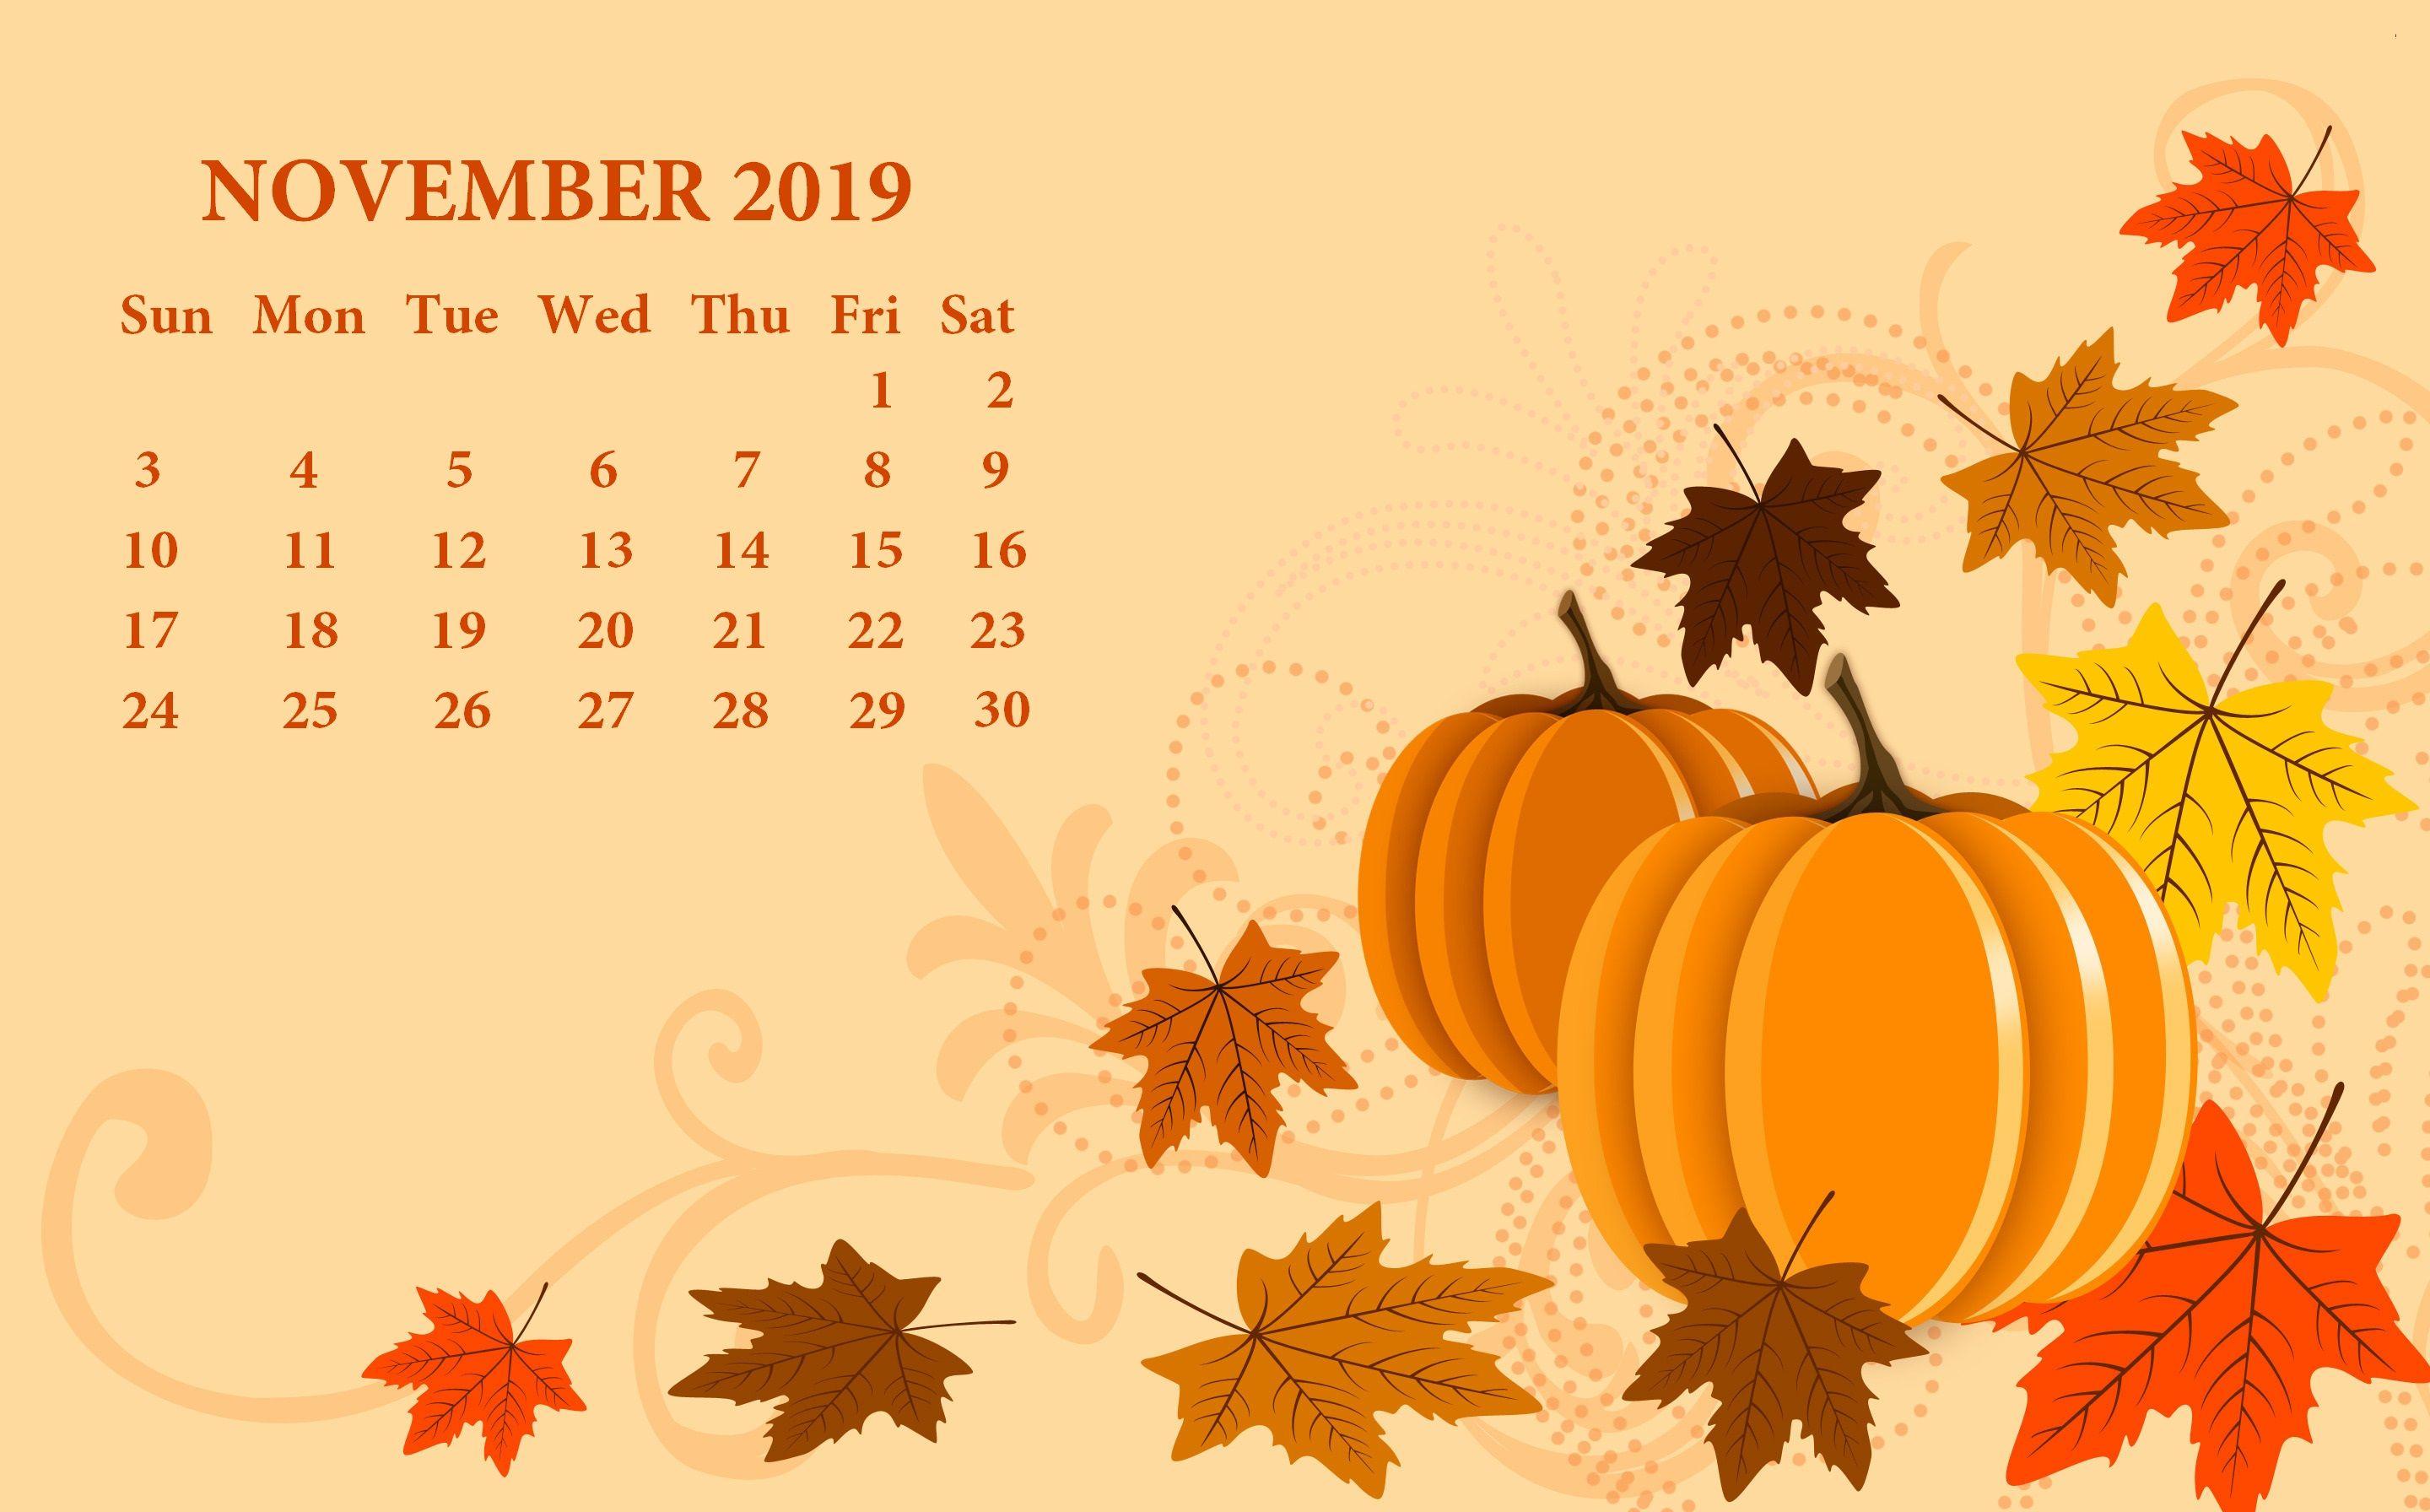 November 2019 Calendar Wallpapers - Top Free November 2019 Calendar ...